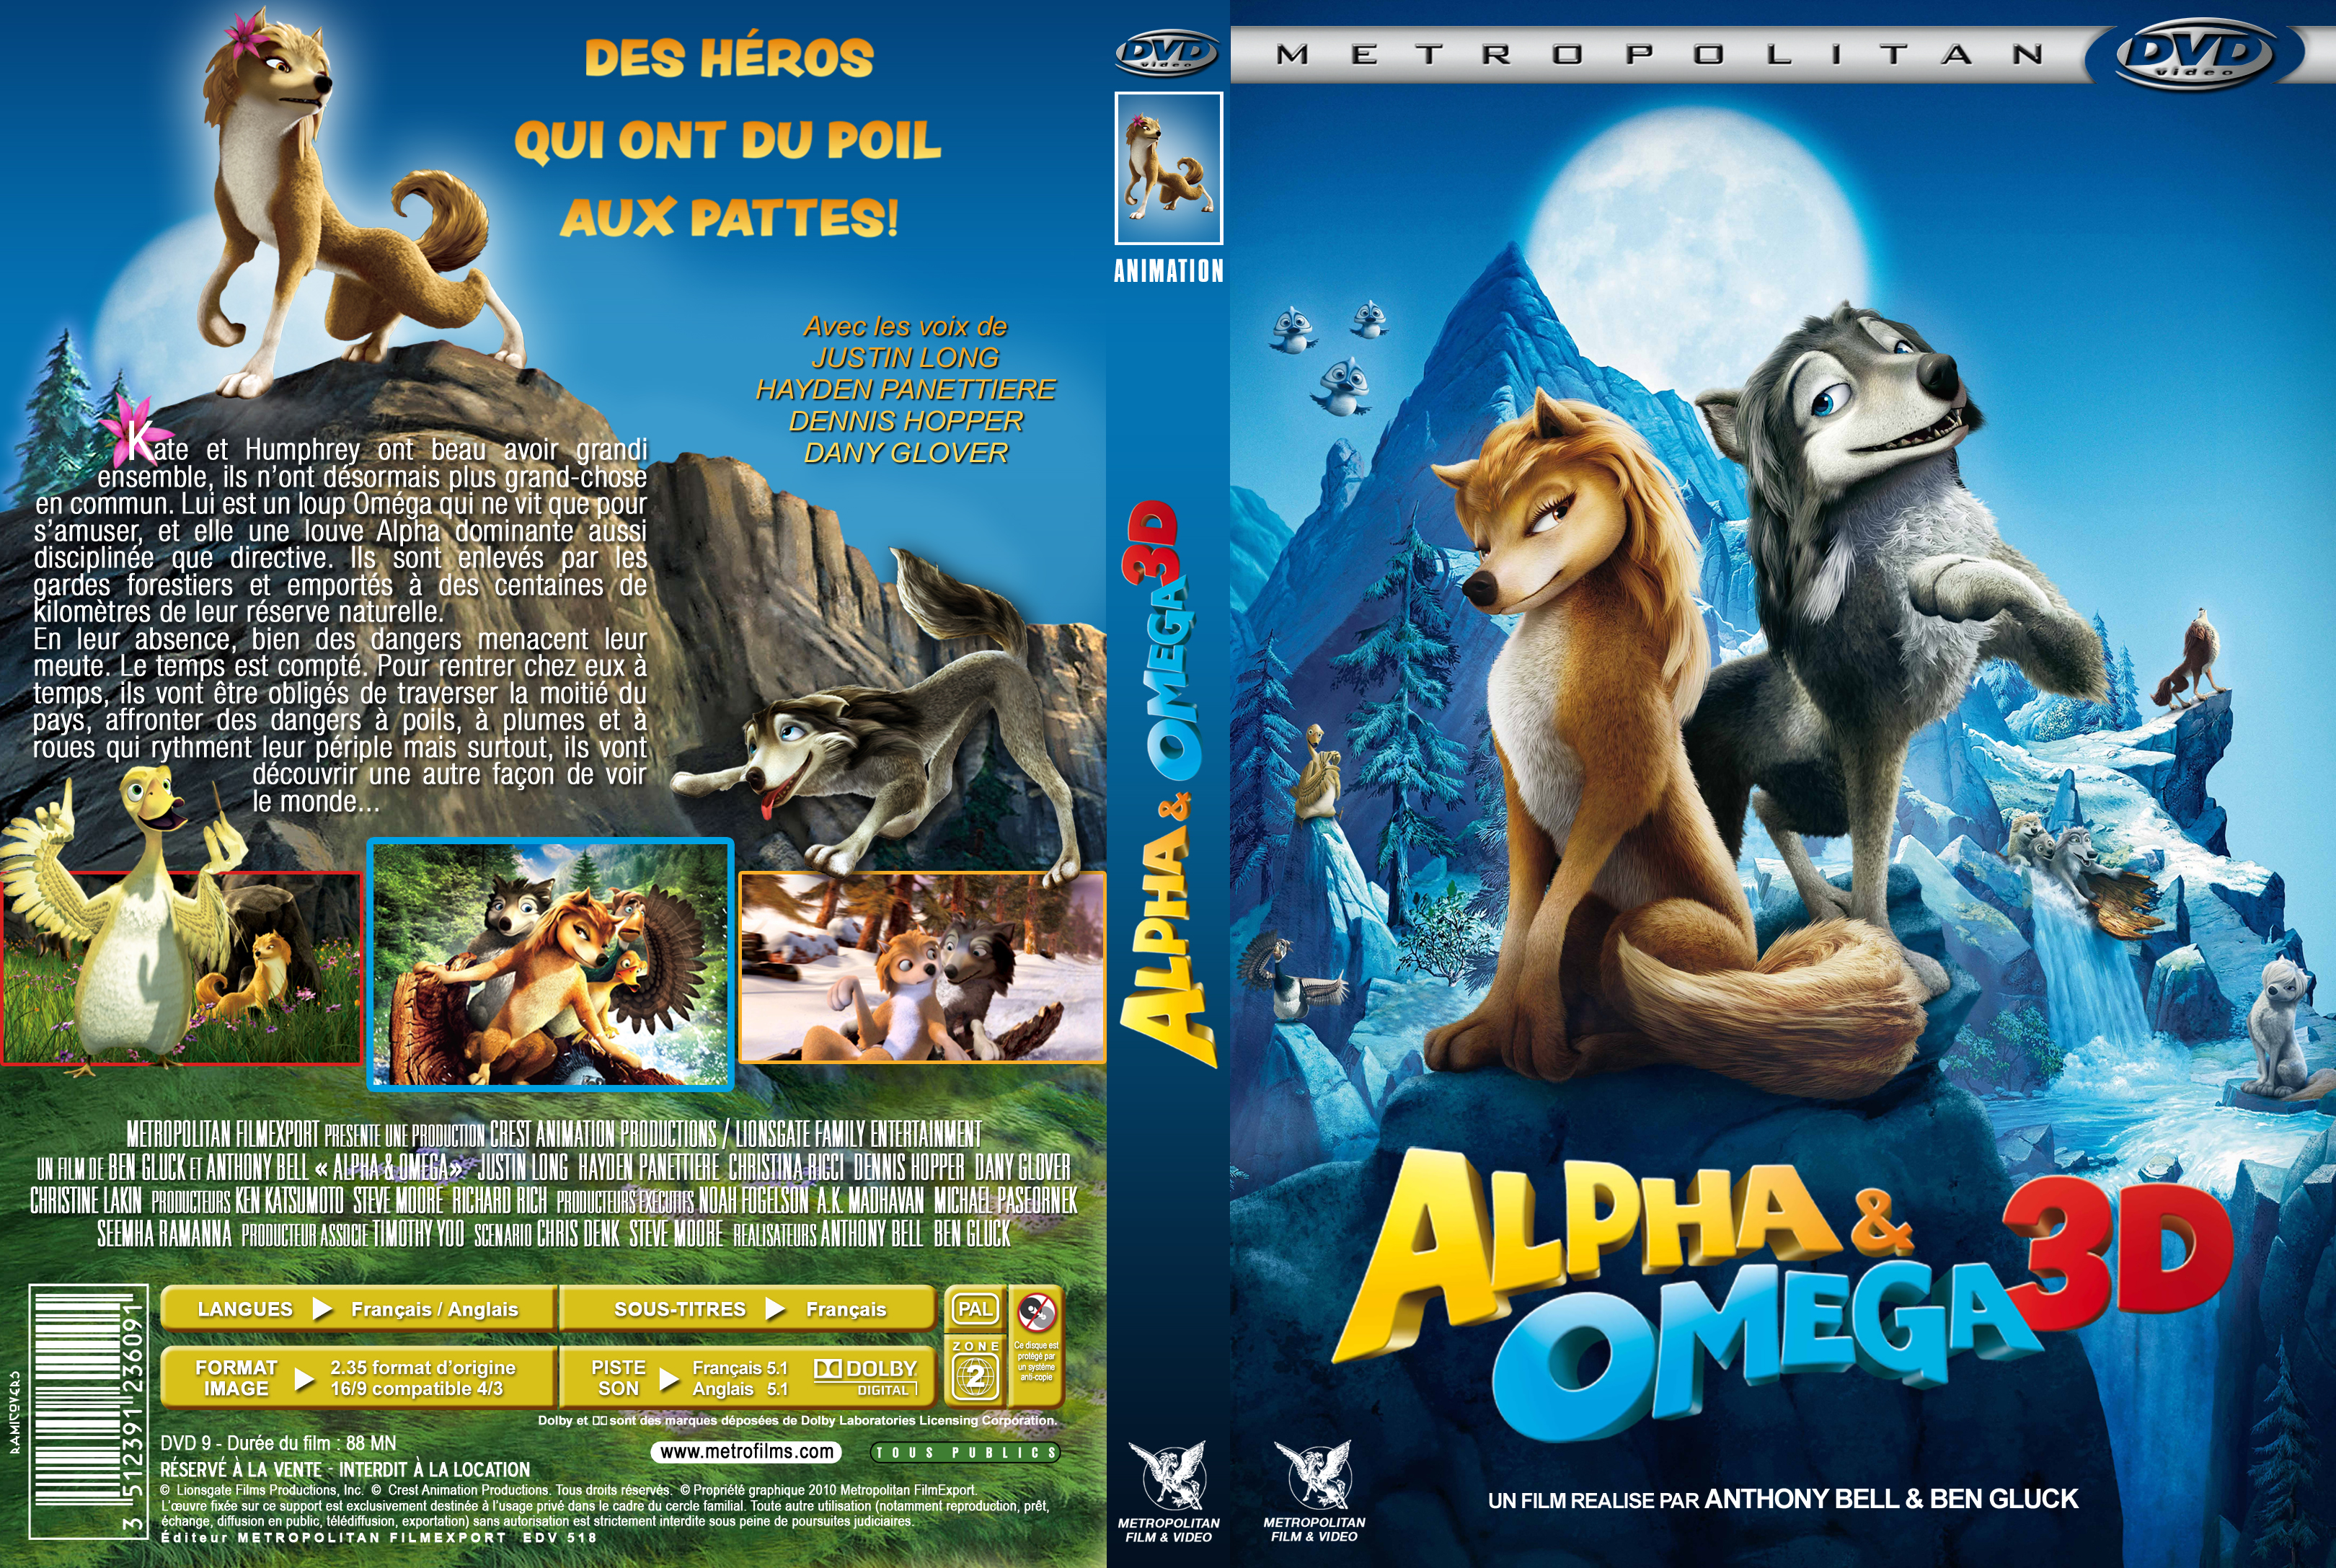 Jaquette DVD Alpha et Omega 3D custom